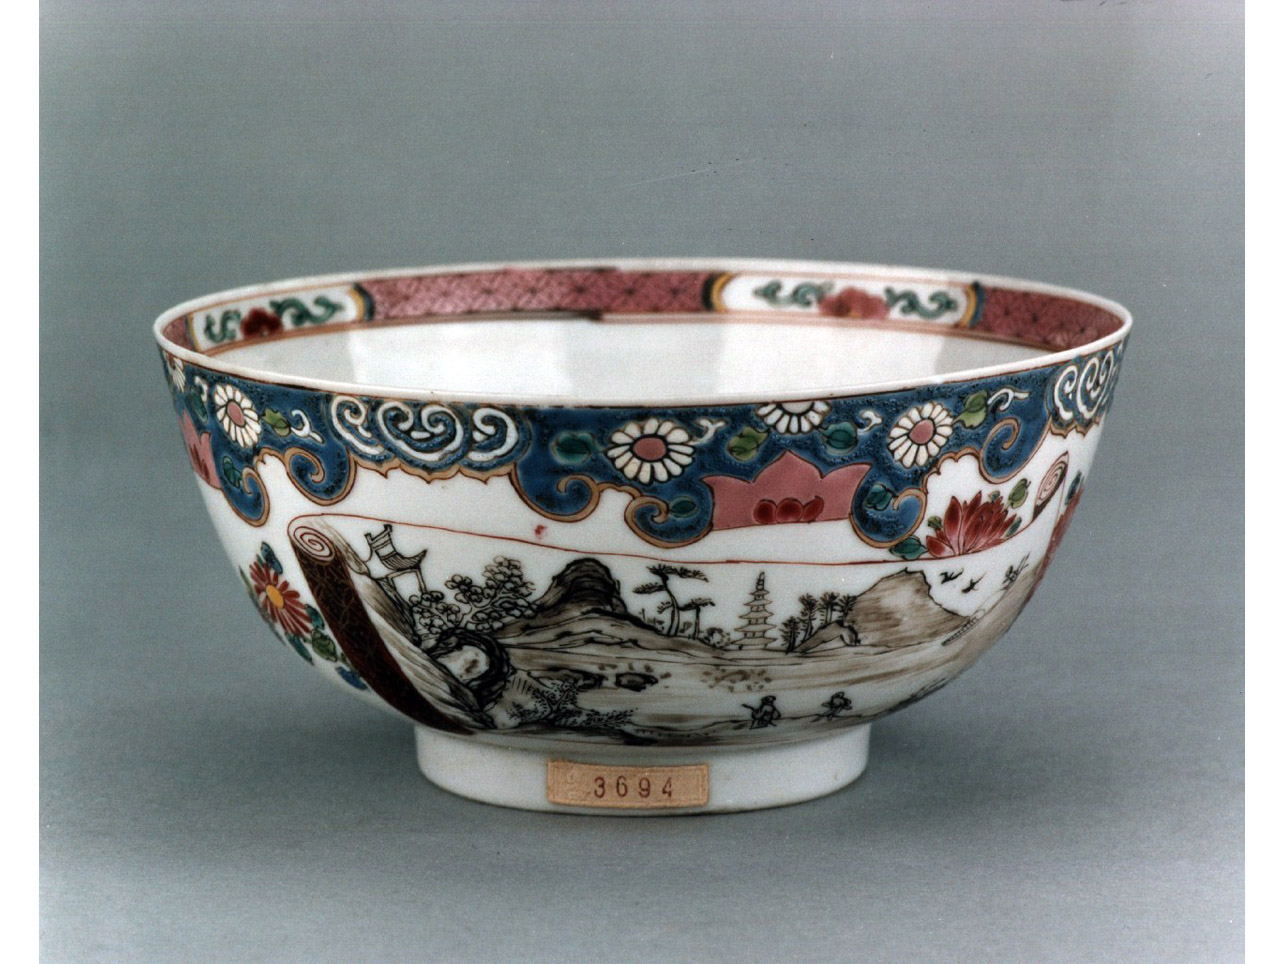 paesaggio/ motivi decorativi vegetali stilizzati (coppa) - manifattura cinese (sec. XVIII)